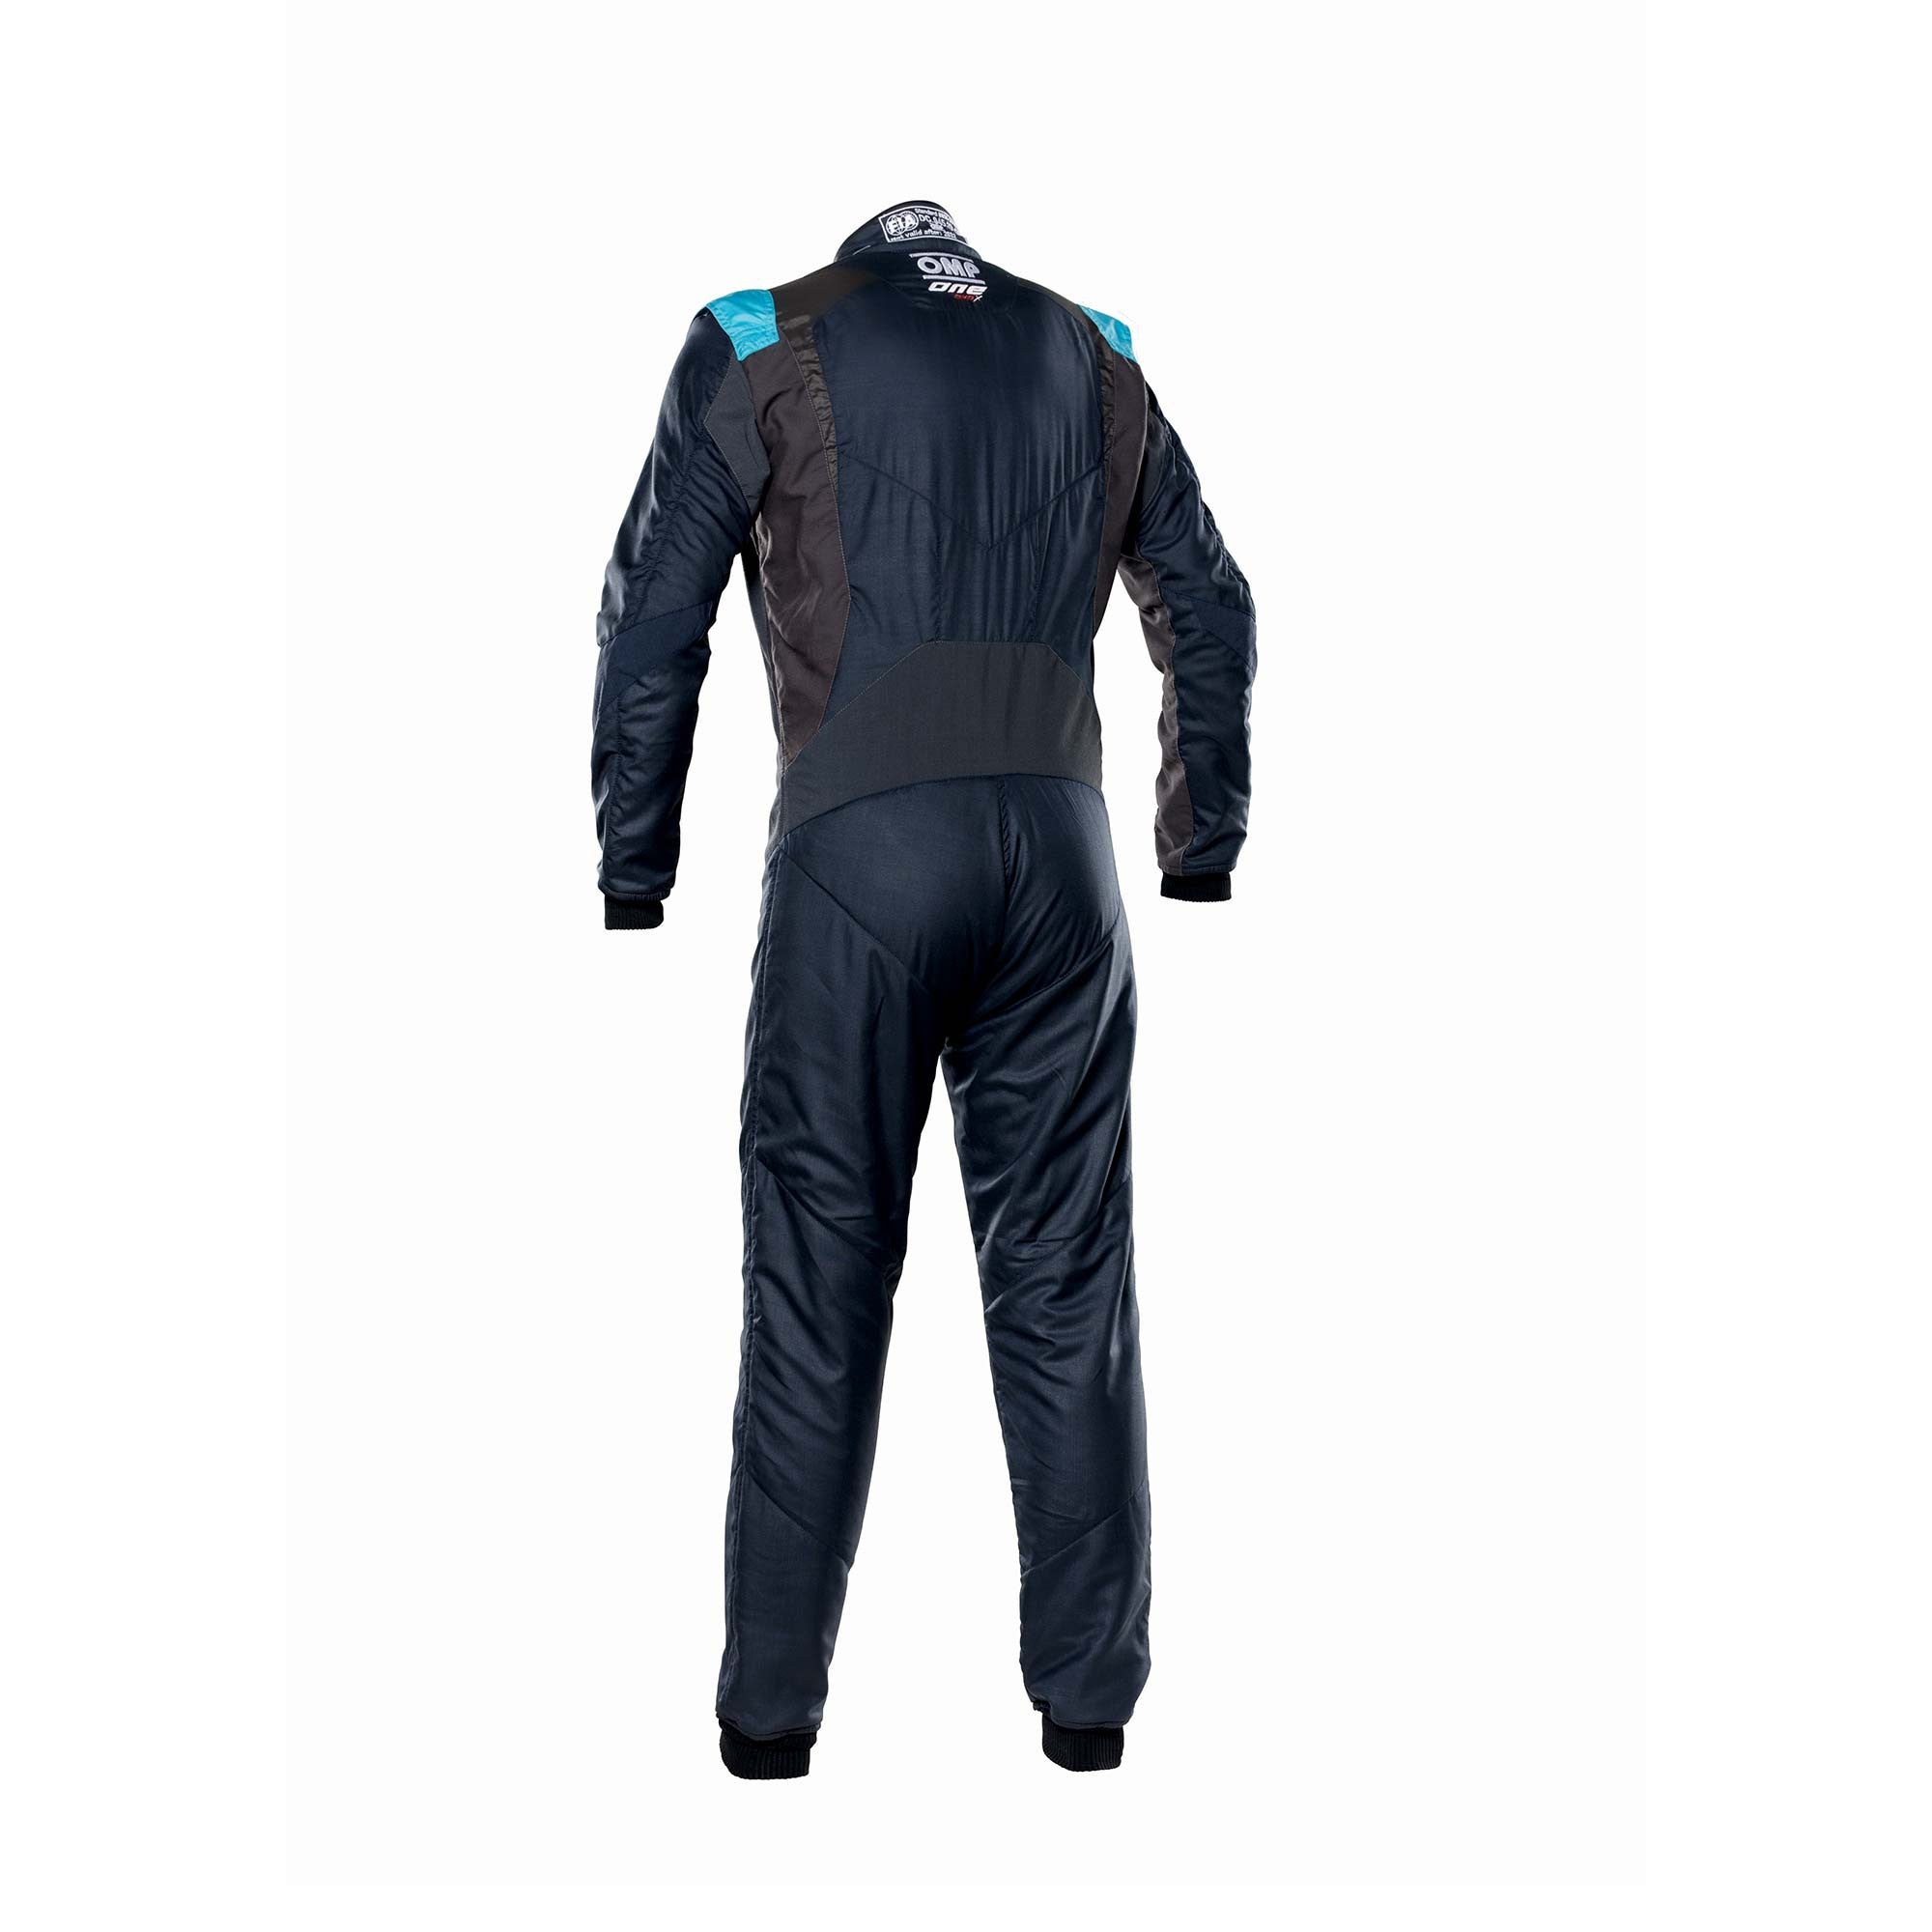 OMP IA0-1861-A01-246-56 Racing suit ONE EVO X, FIA 8856-2018, navy blue/gray/cyan, size 56 Photo-1 